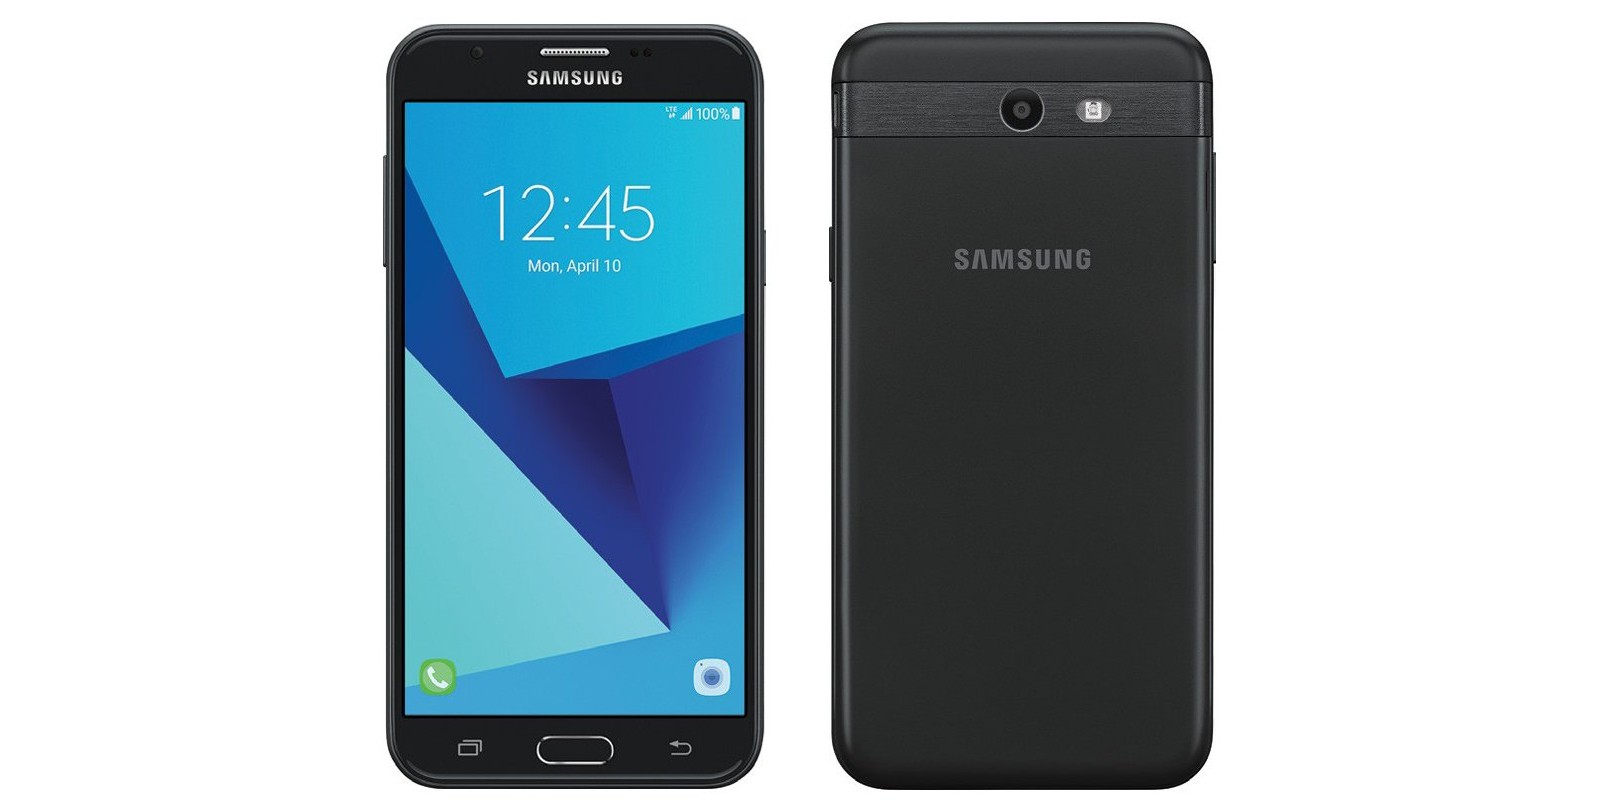 How to fix Samsung Galaxy J7 V battery life problemsHow to fix Samsung Galaxy J7 V battery life problems